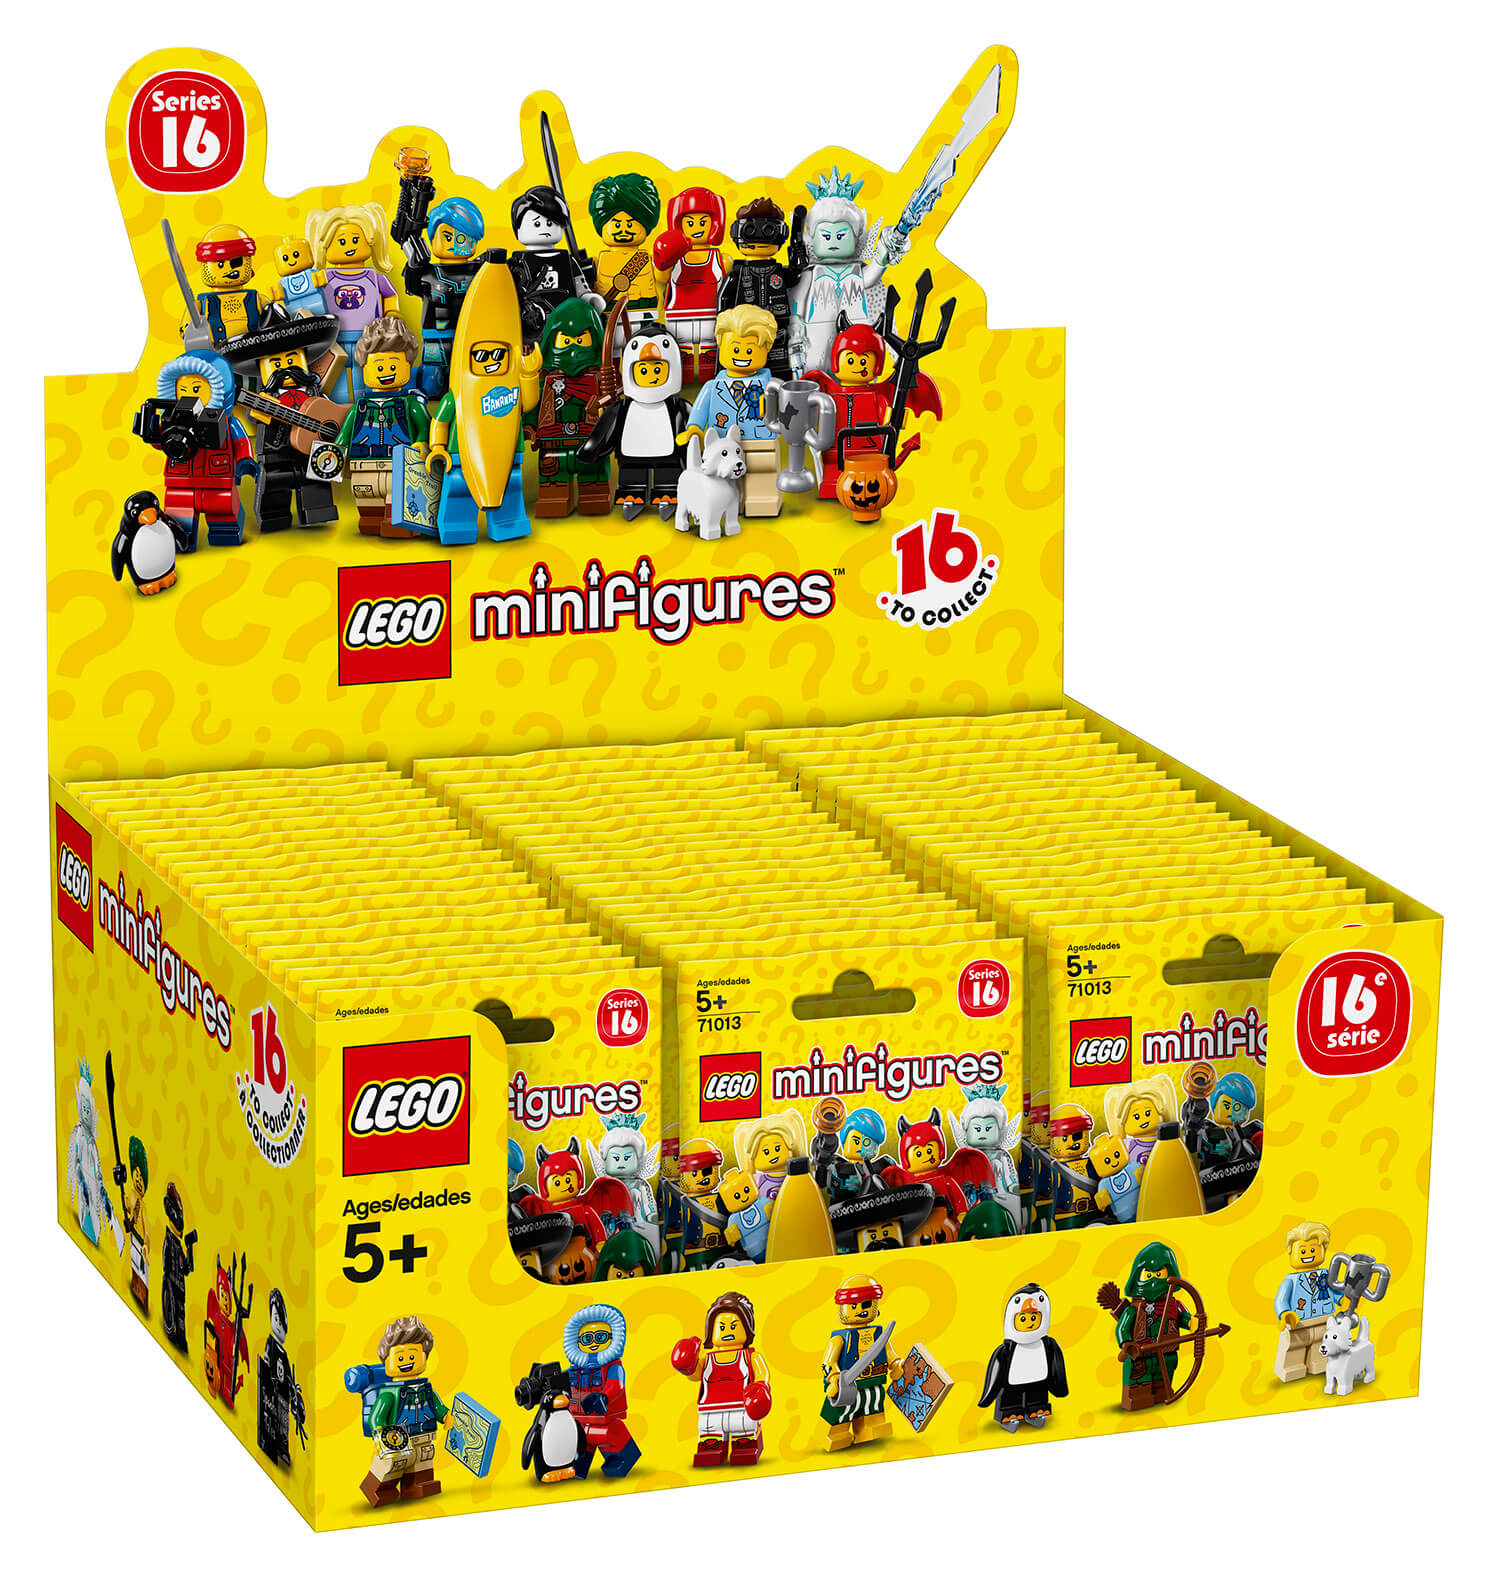 LEGO MINIFIGURE​​S SERIES 16 71013 Kickboxer